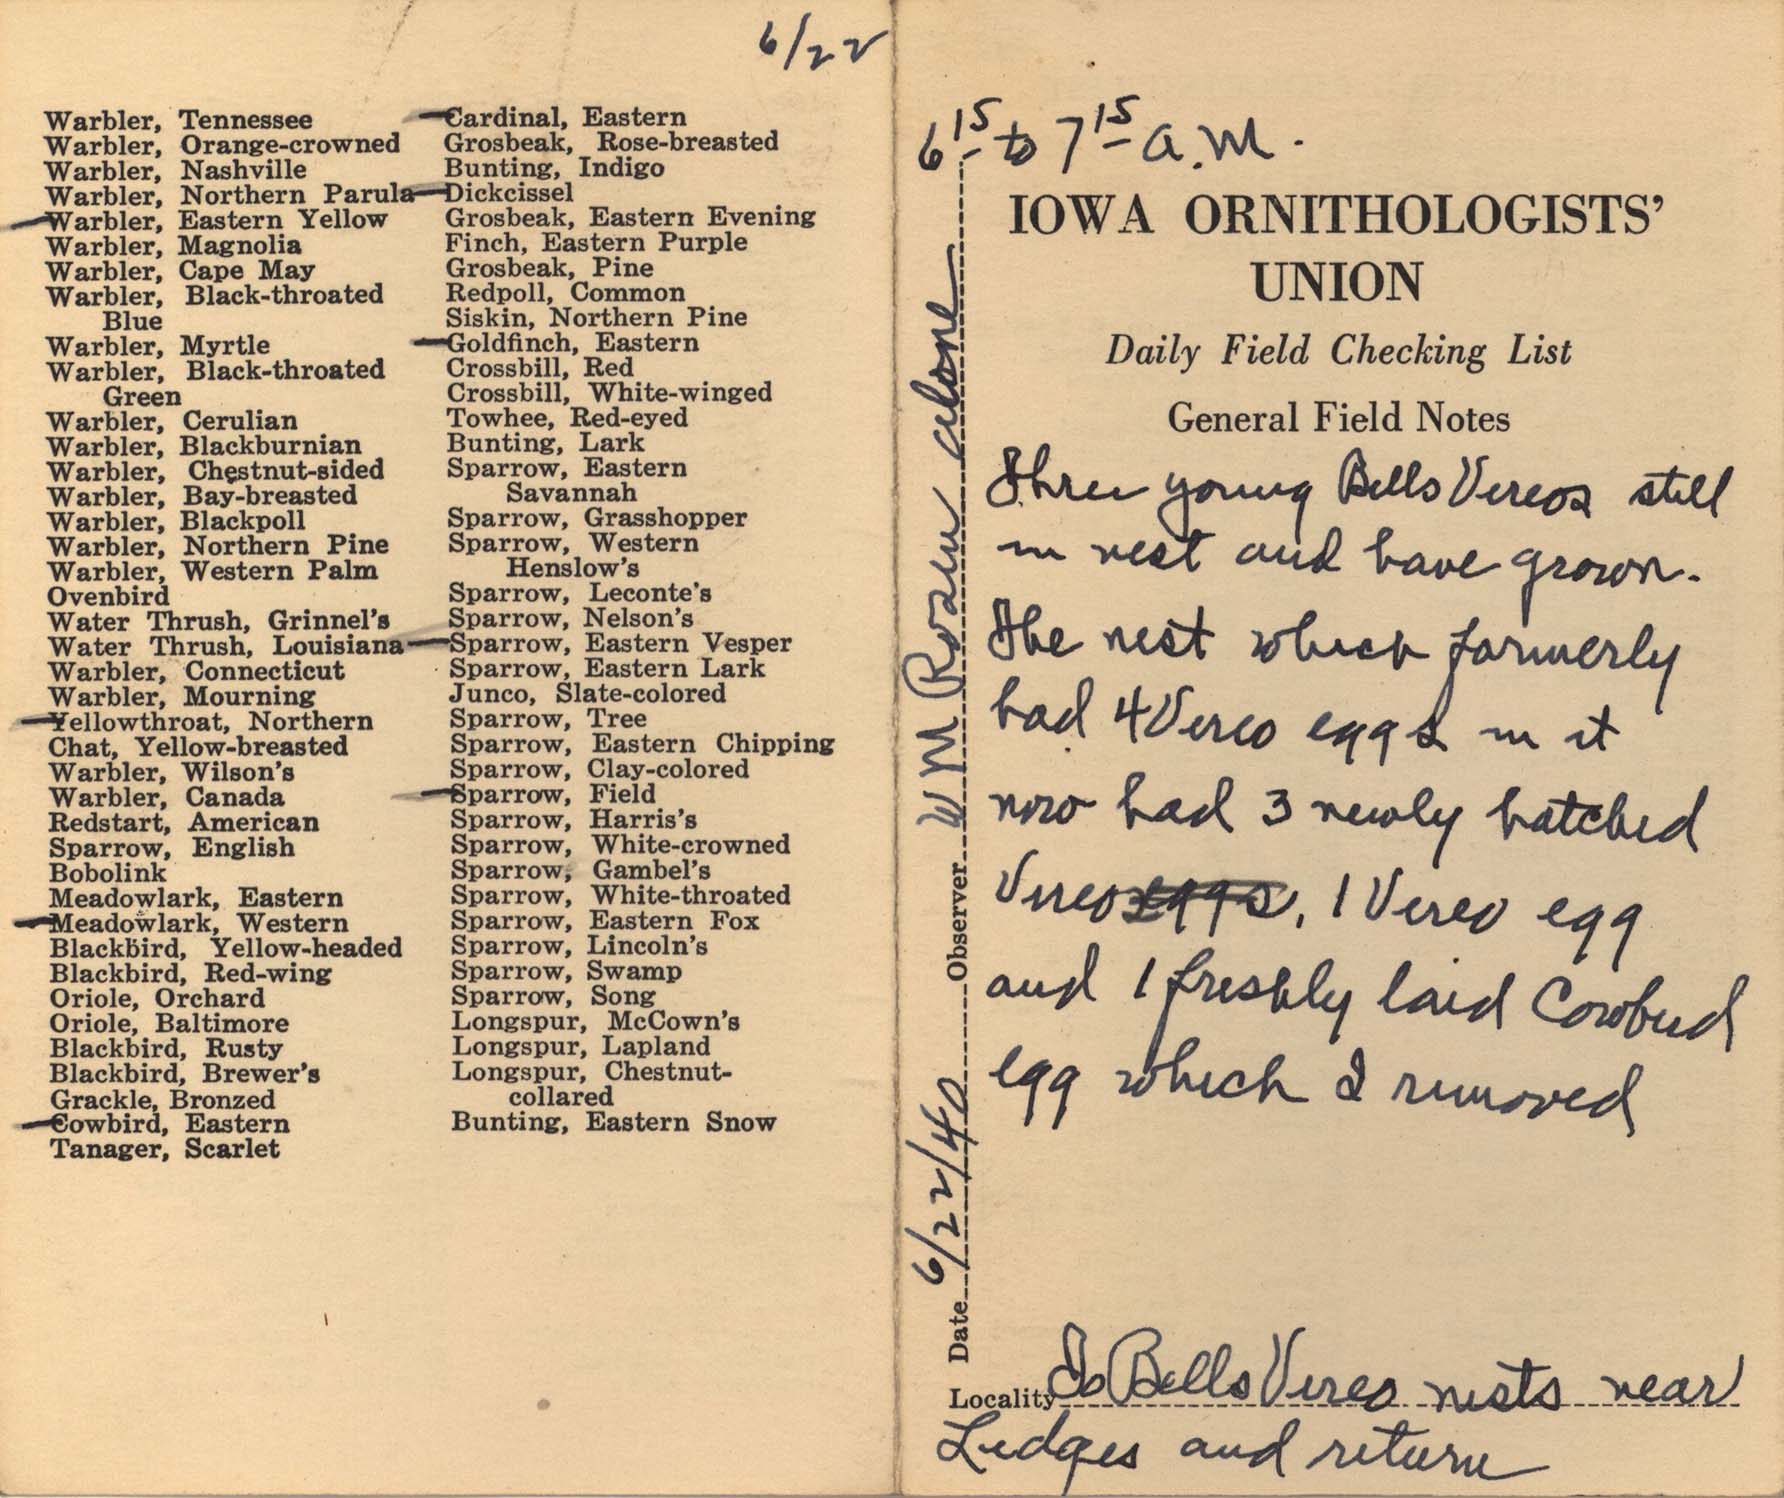 Daily field checking list by Walter Rosene, June 22, 1940